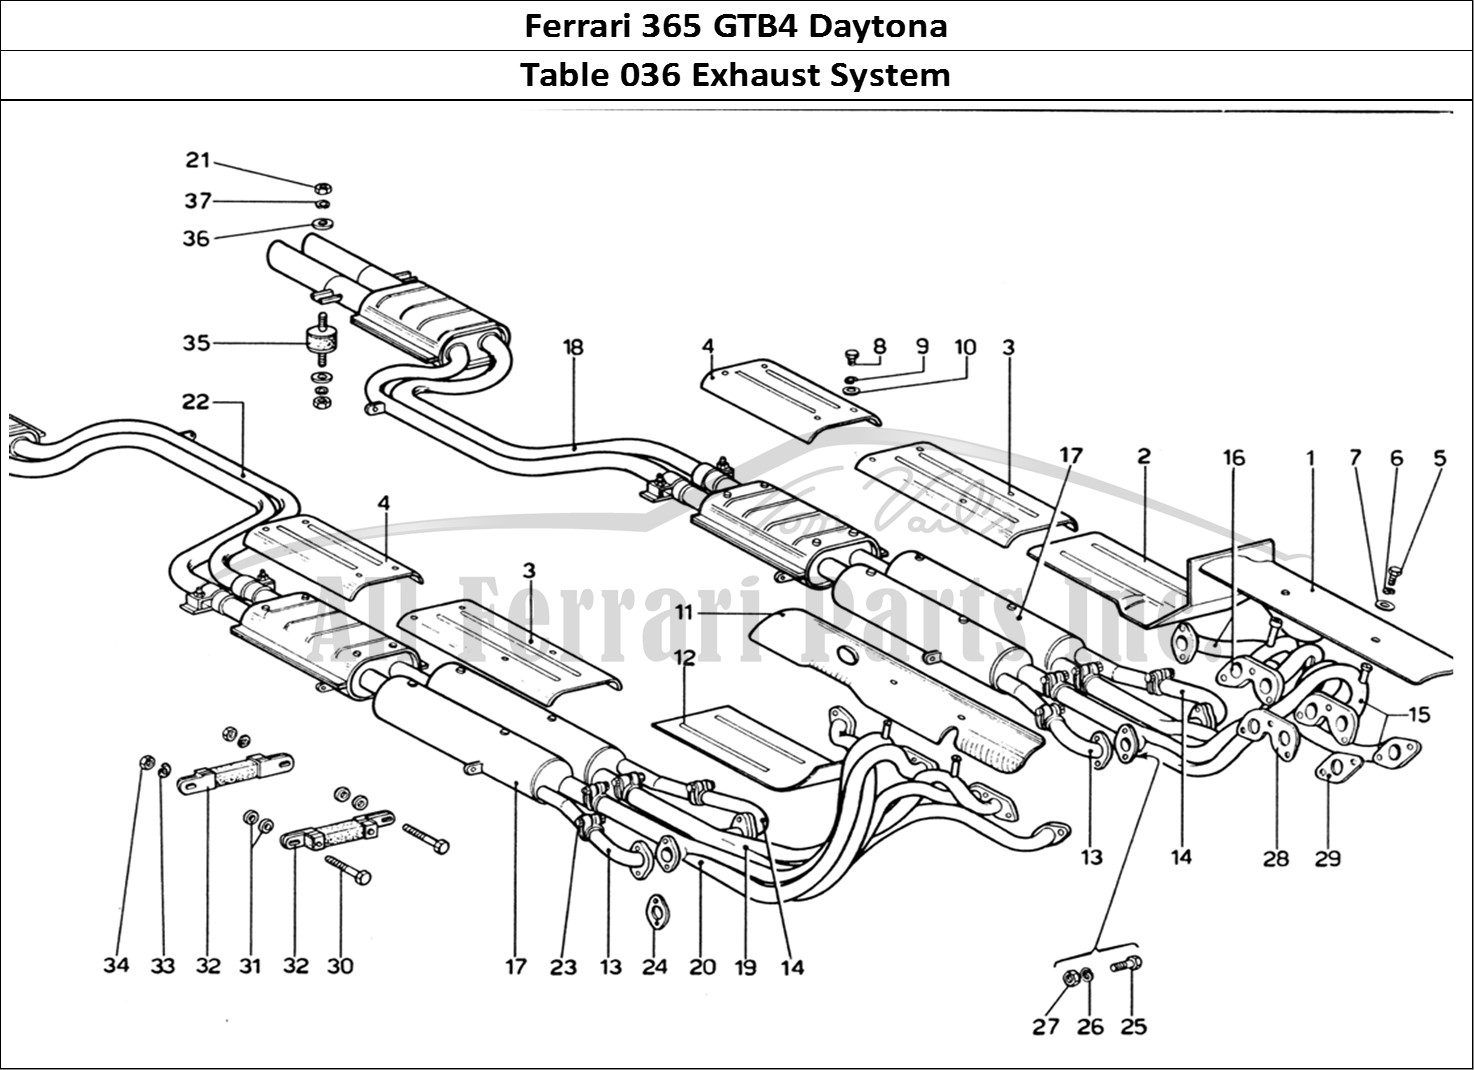 Ferrari Parts Ferrari 365 GTB4 Daytona (1969) Page 036 Exhaust System